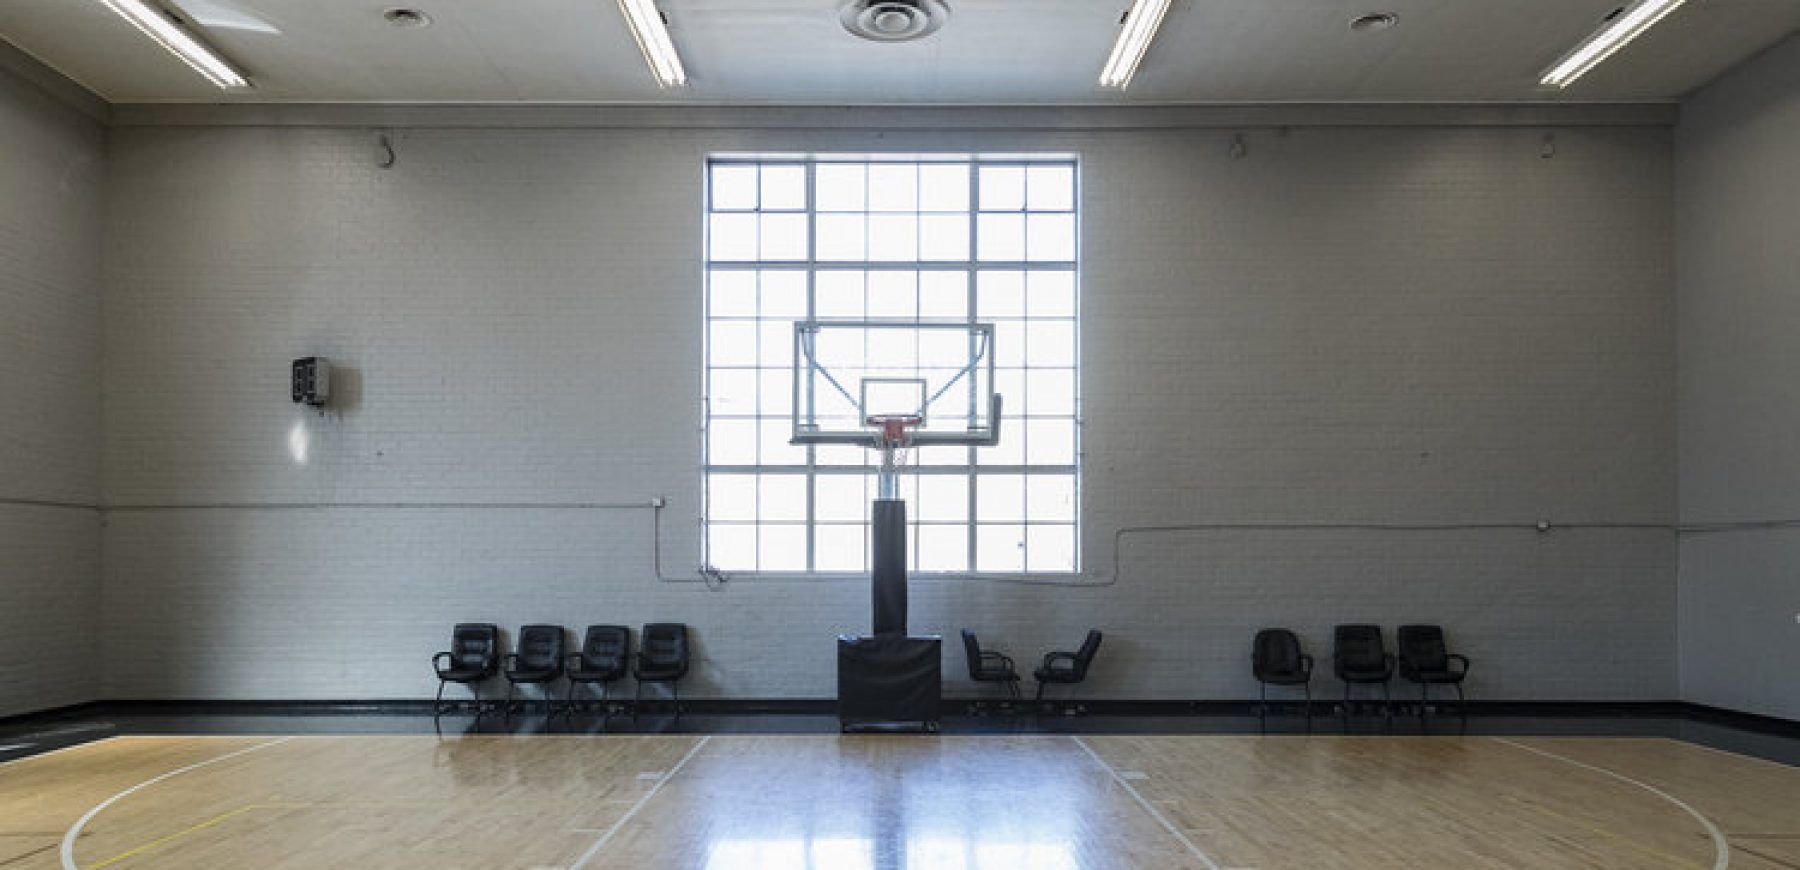 Basketball-Court-2-R